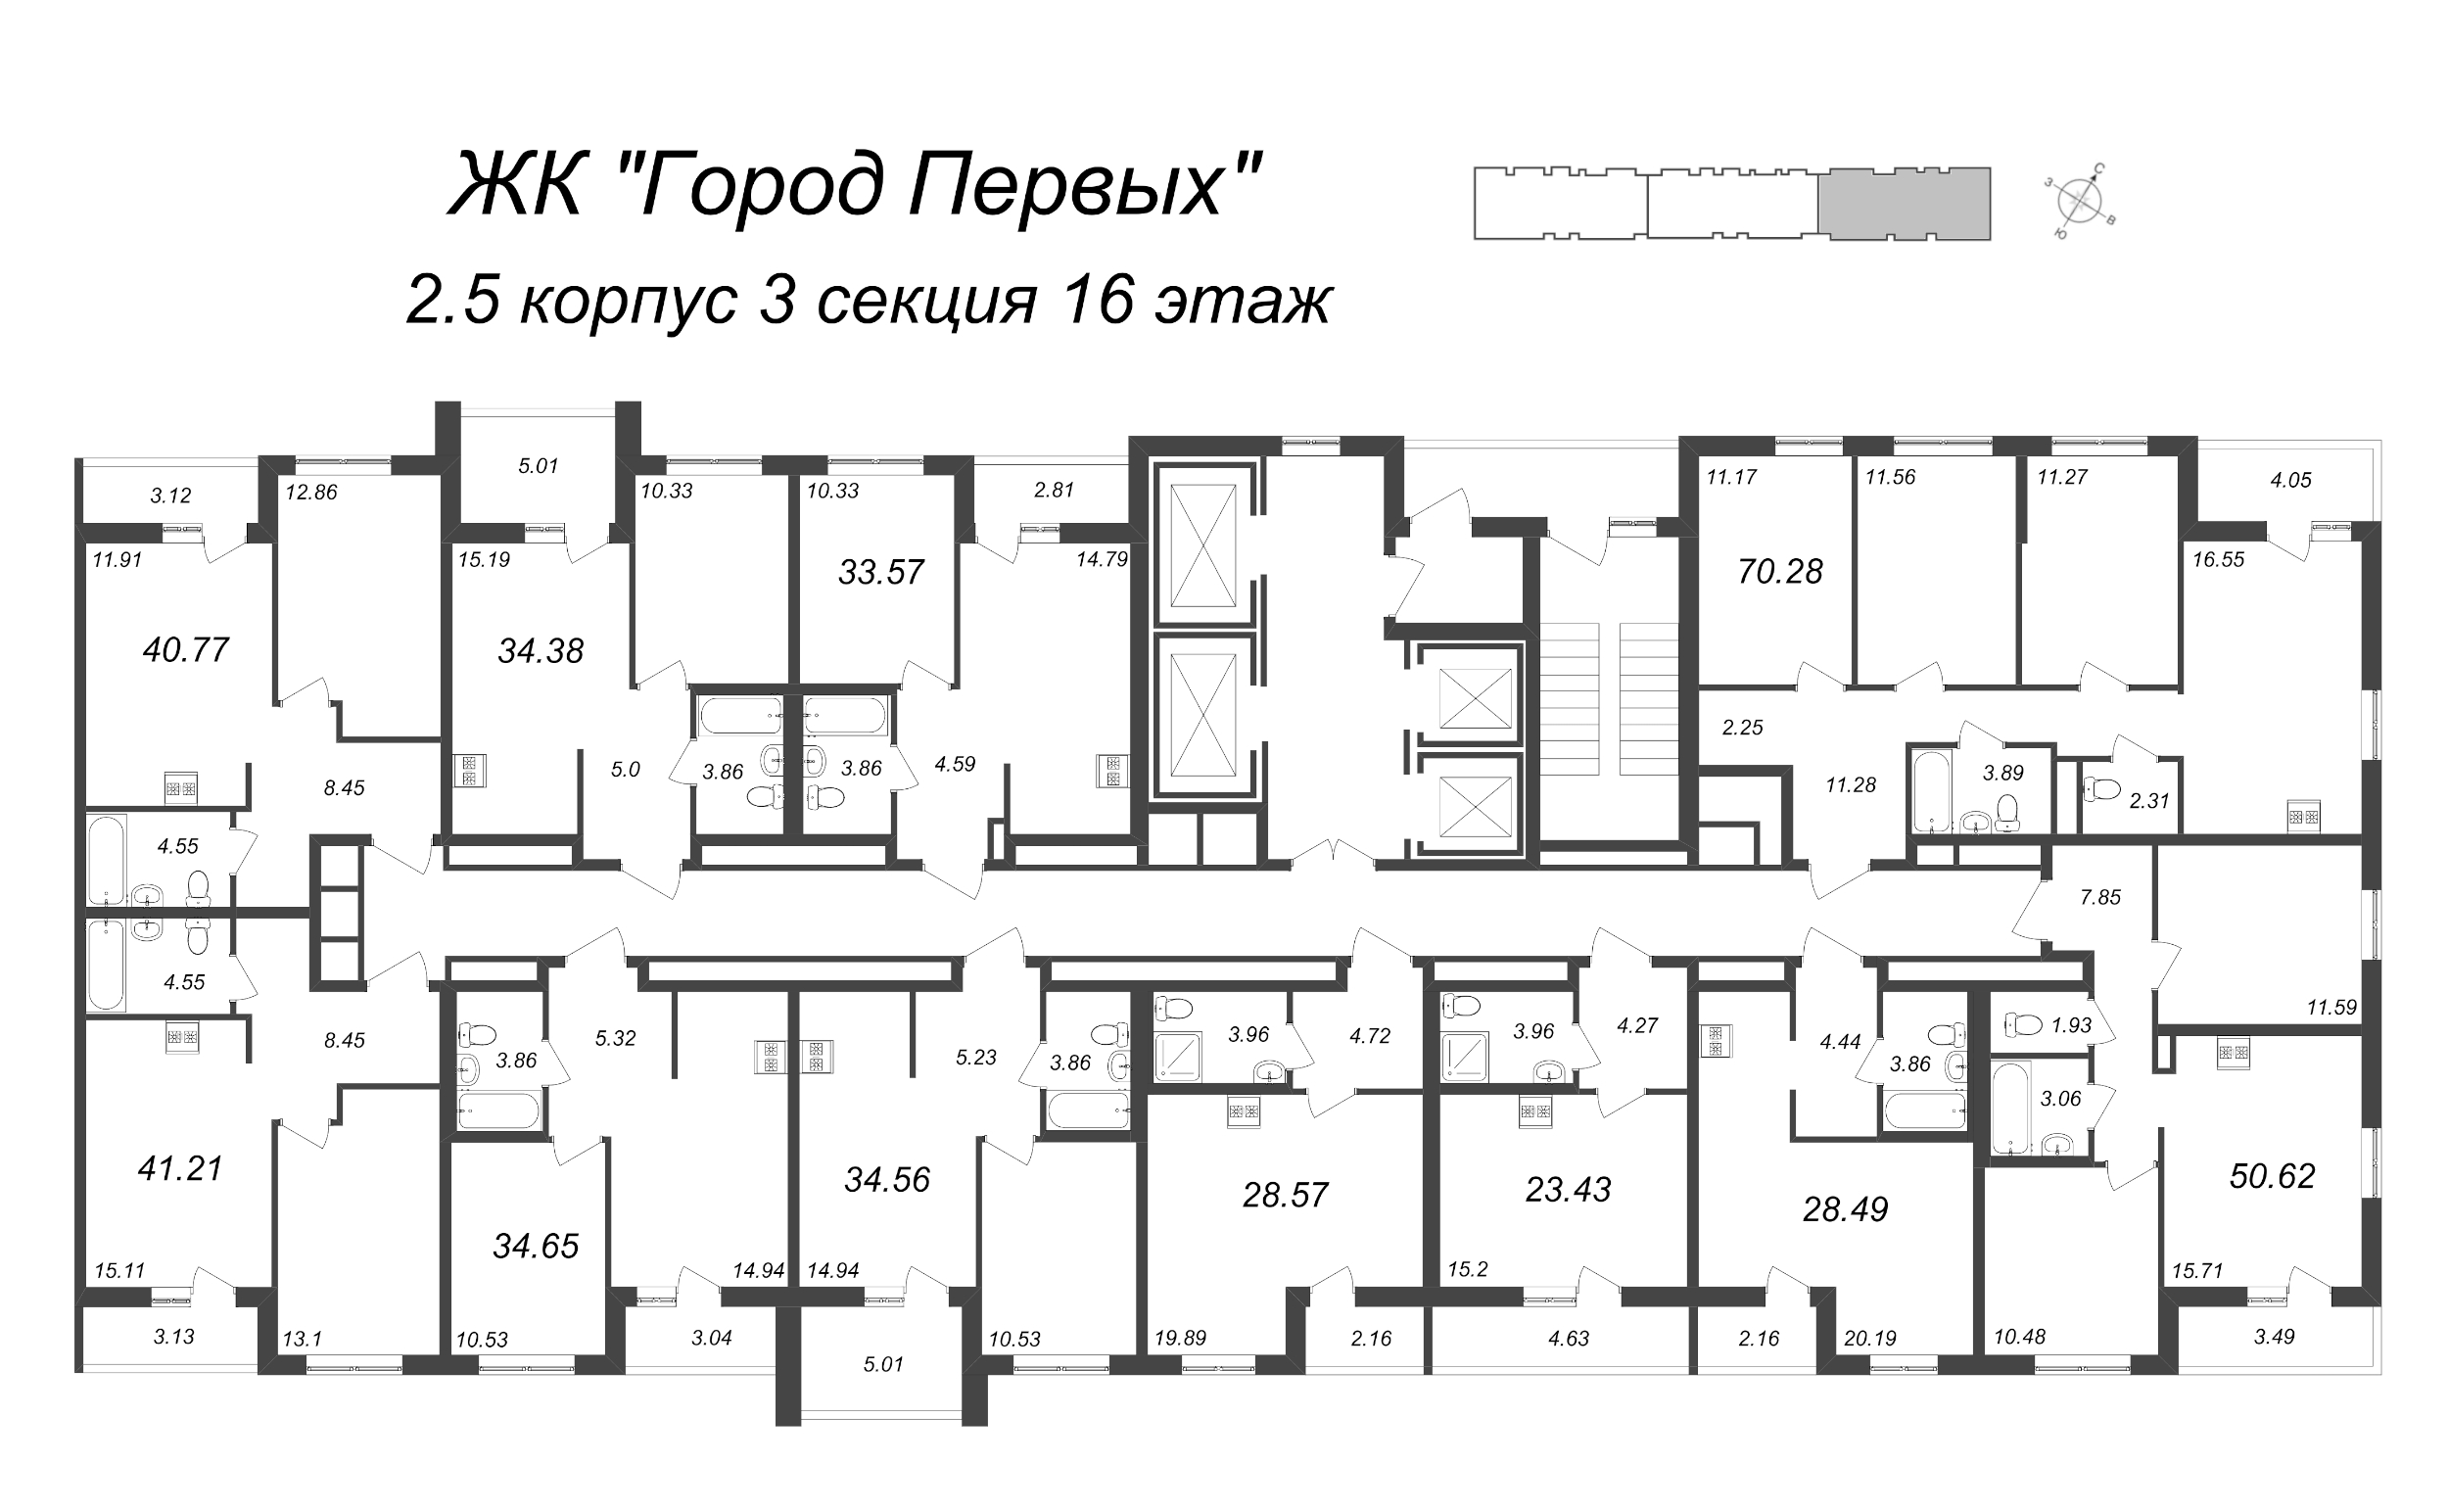 2-комнатная (Евро) квартира, 41.21 м² - планировка этажа